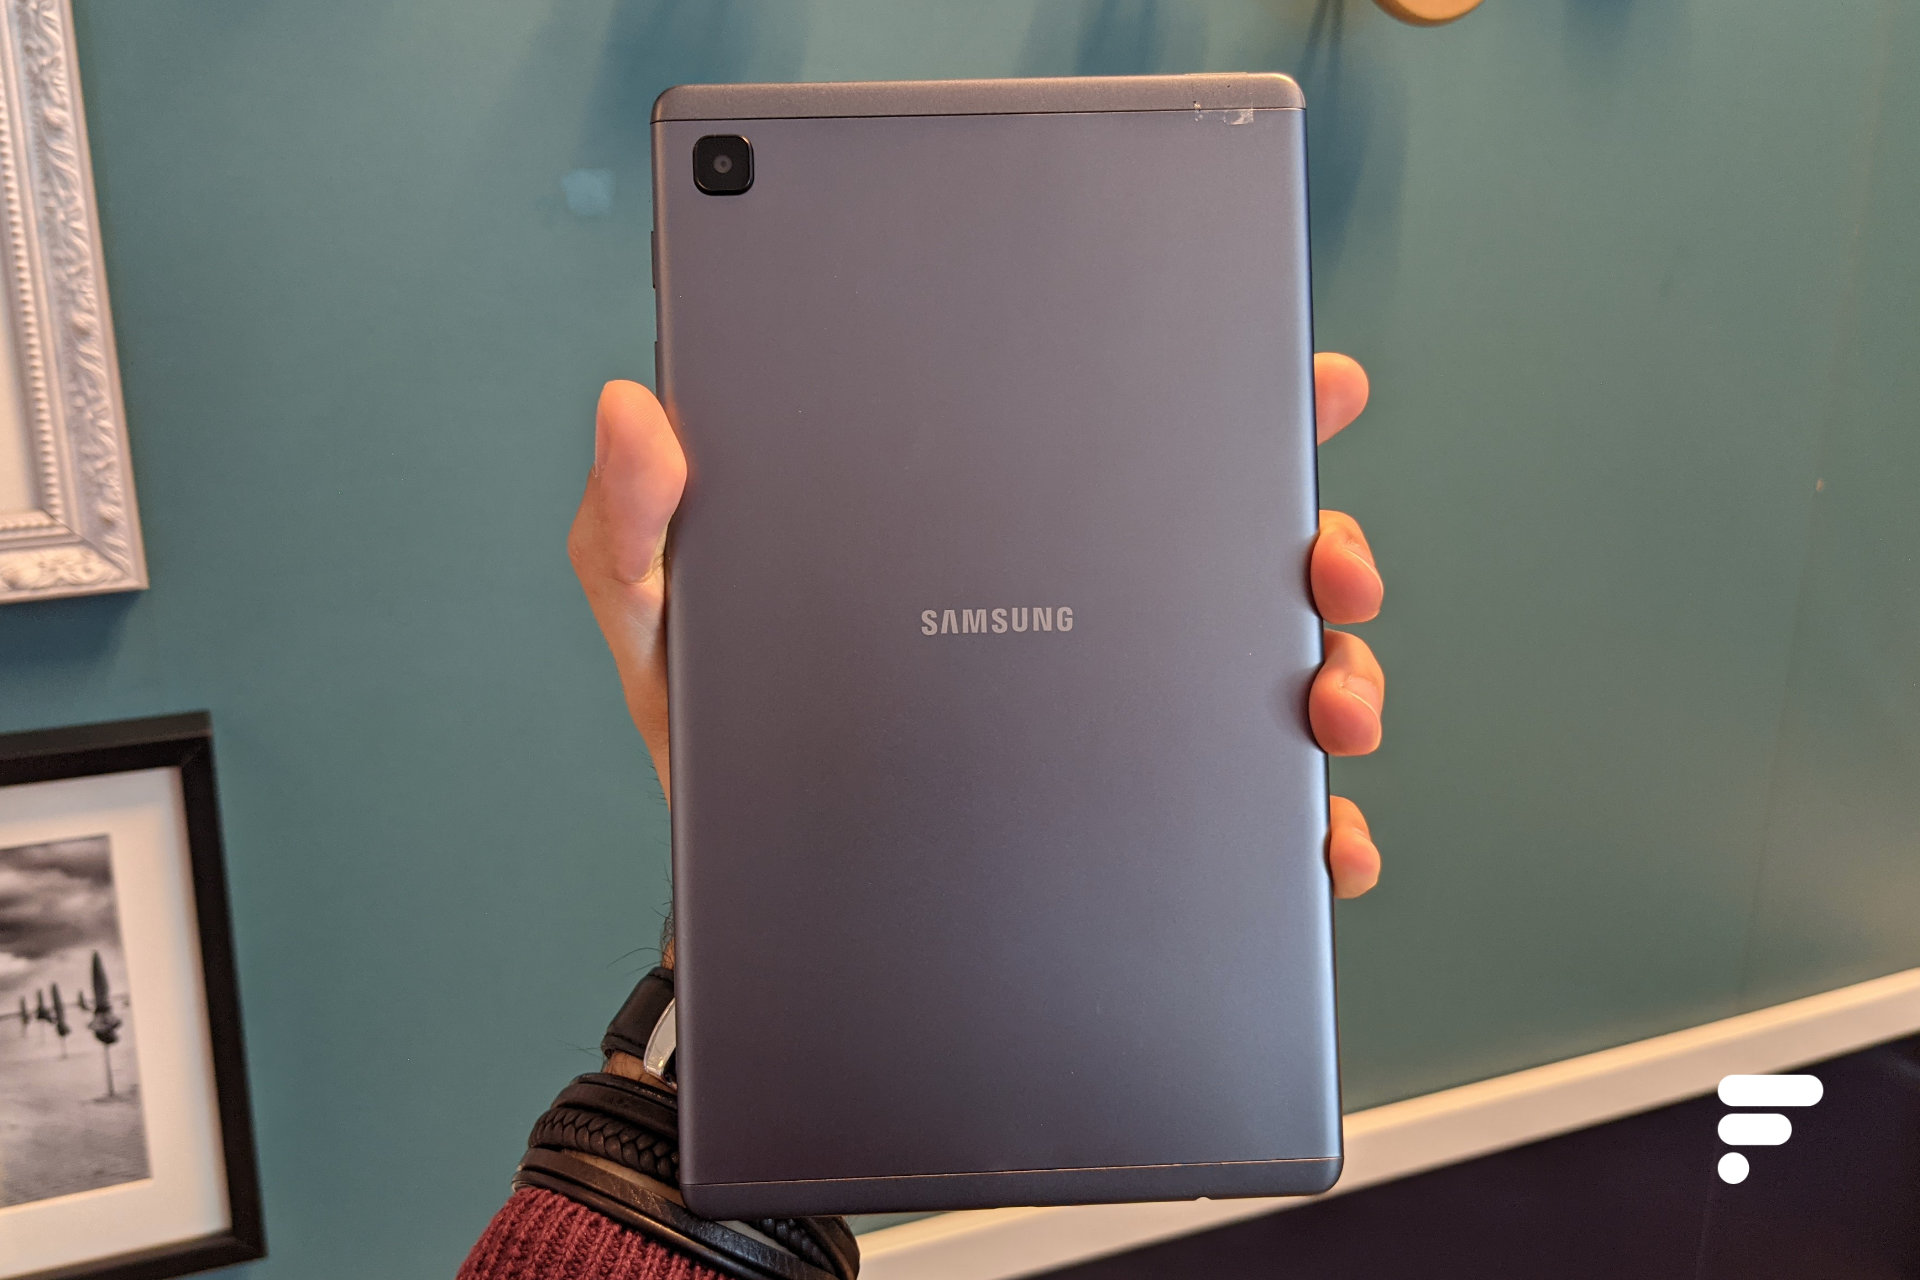 Tablette Samsung Galaxy Tab A7 Lite prix pas cher à Dakar